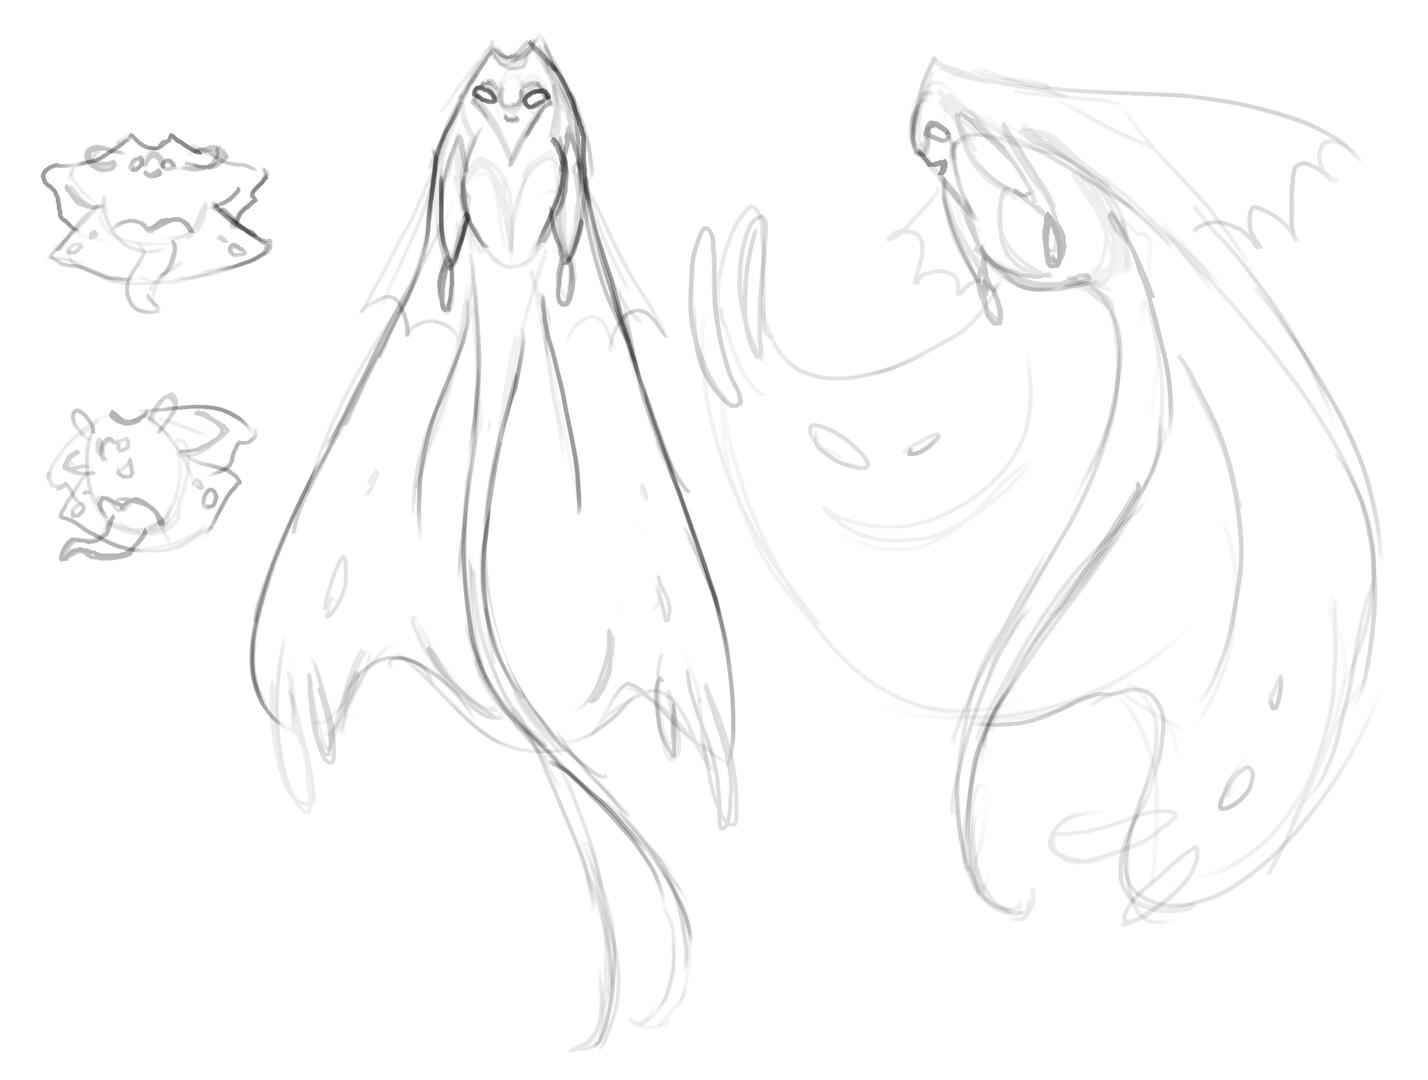 Manta ray sort of character design doodles